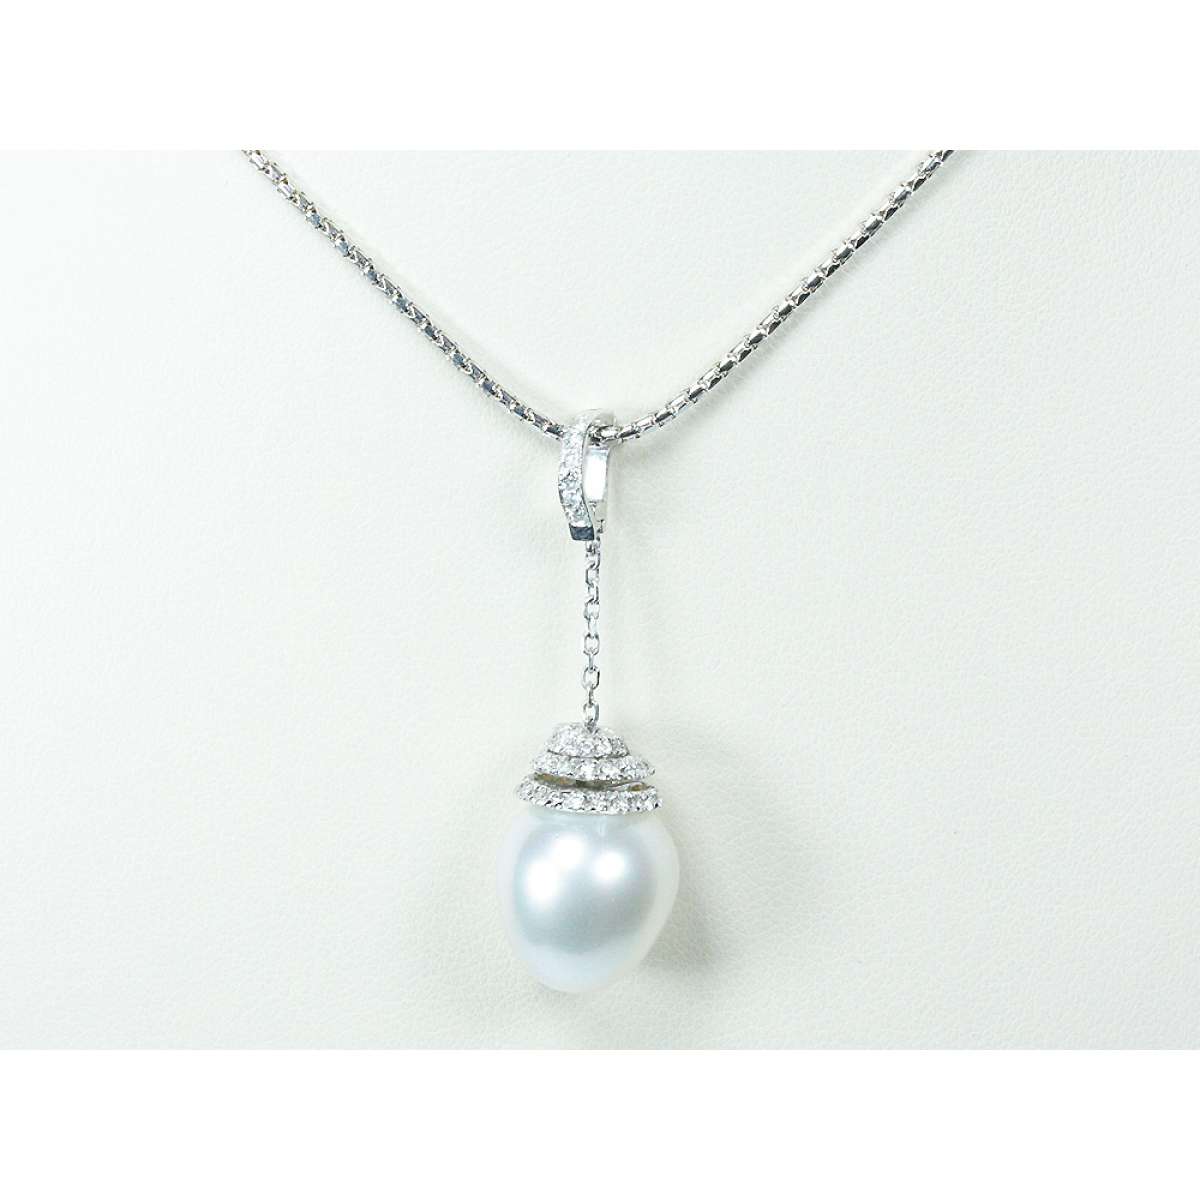 White gold necklace with irregular Australian pearl 12mm 0.36 carats diamonds G-VVS1